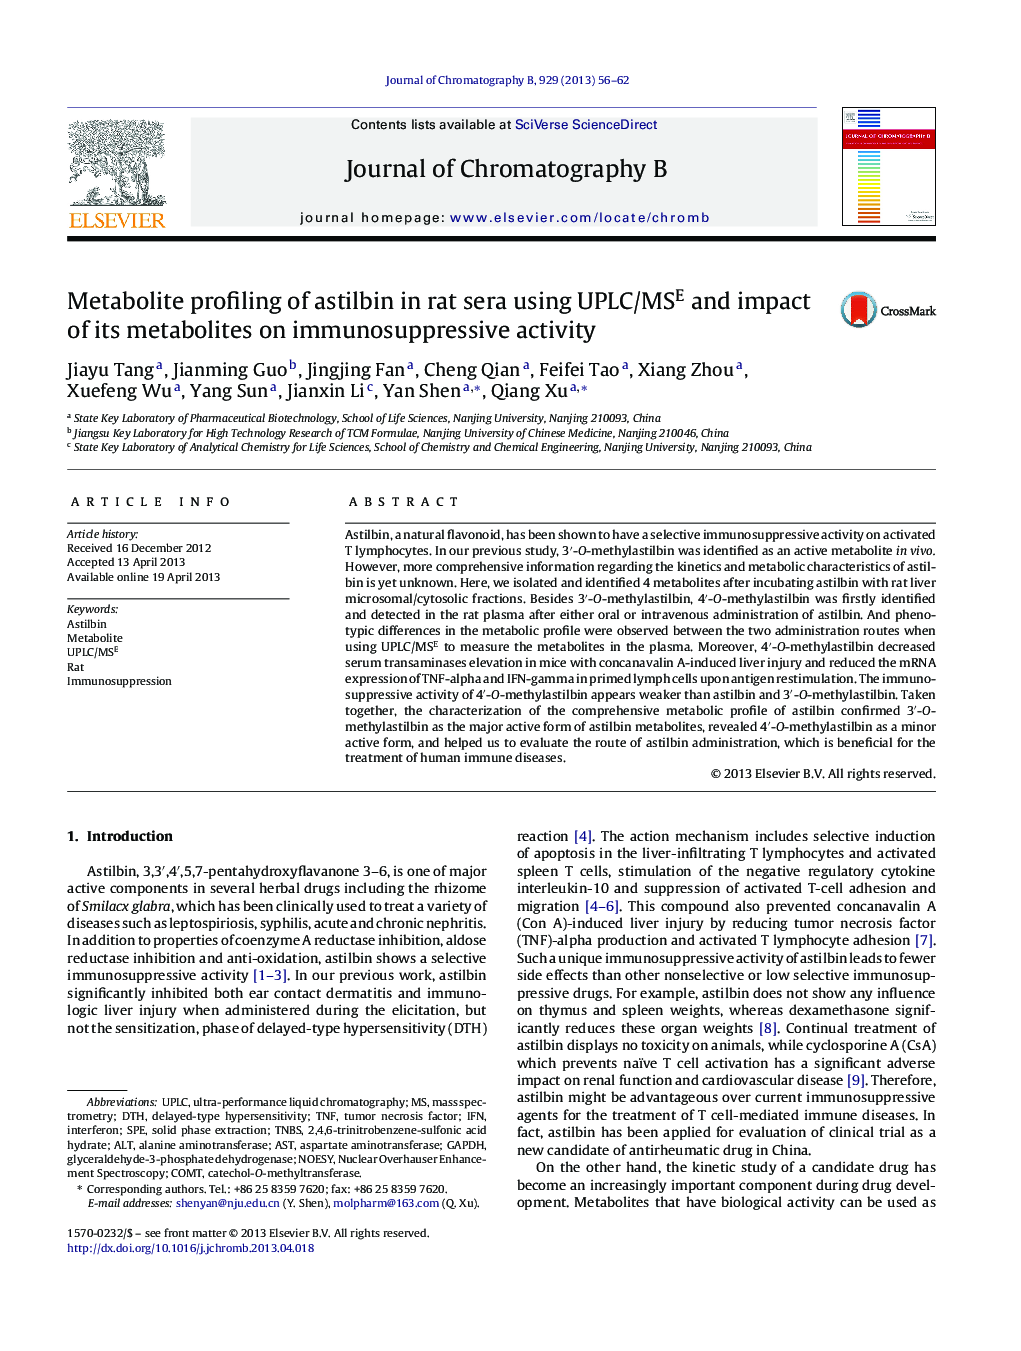 Metabolite profiling of astilbin in rat sera using UPLC/MSE and impact of its metabolites on immunosuppressive activity